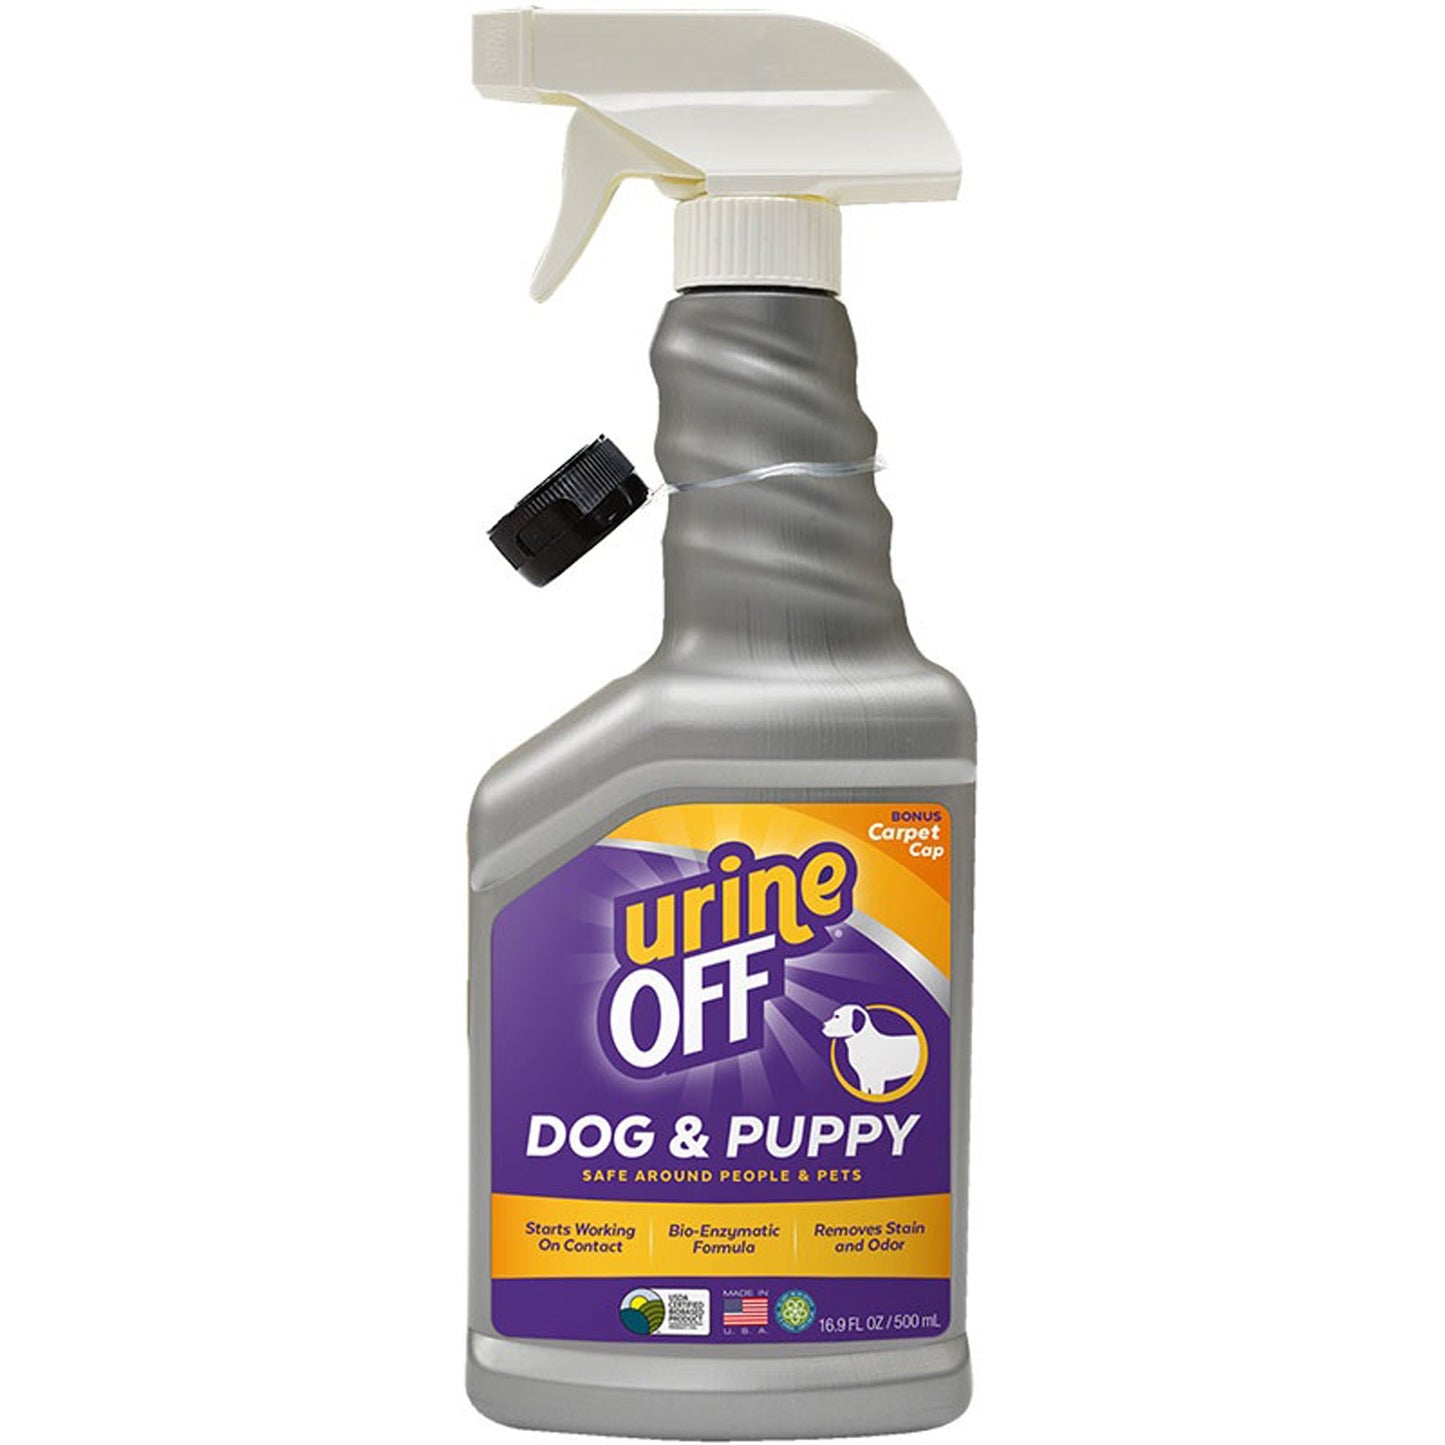 Urine Off Dog & Puppy Hard Surface Sprayer with Carpet Applicator Cap 1ea/16.9 oz